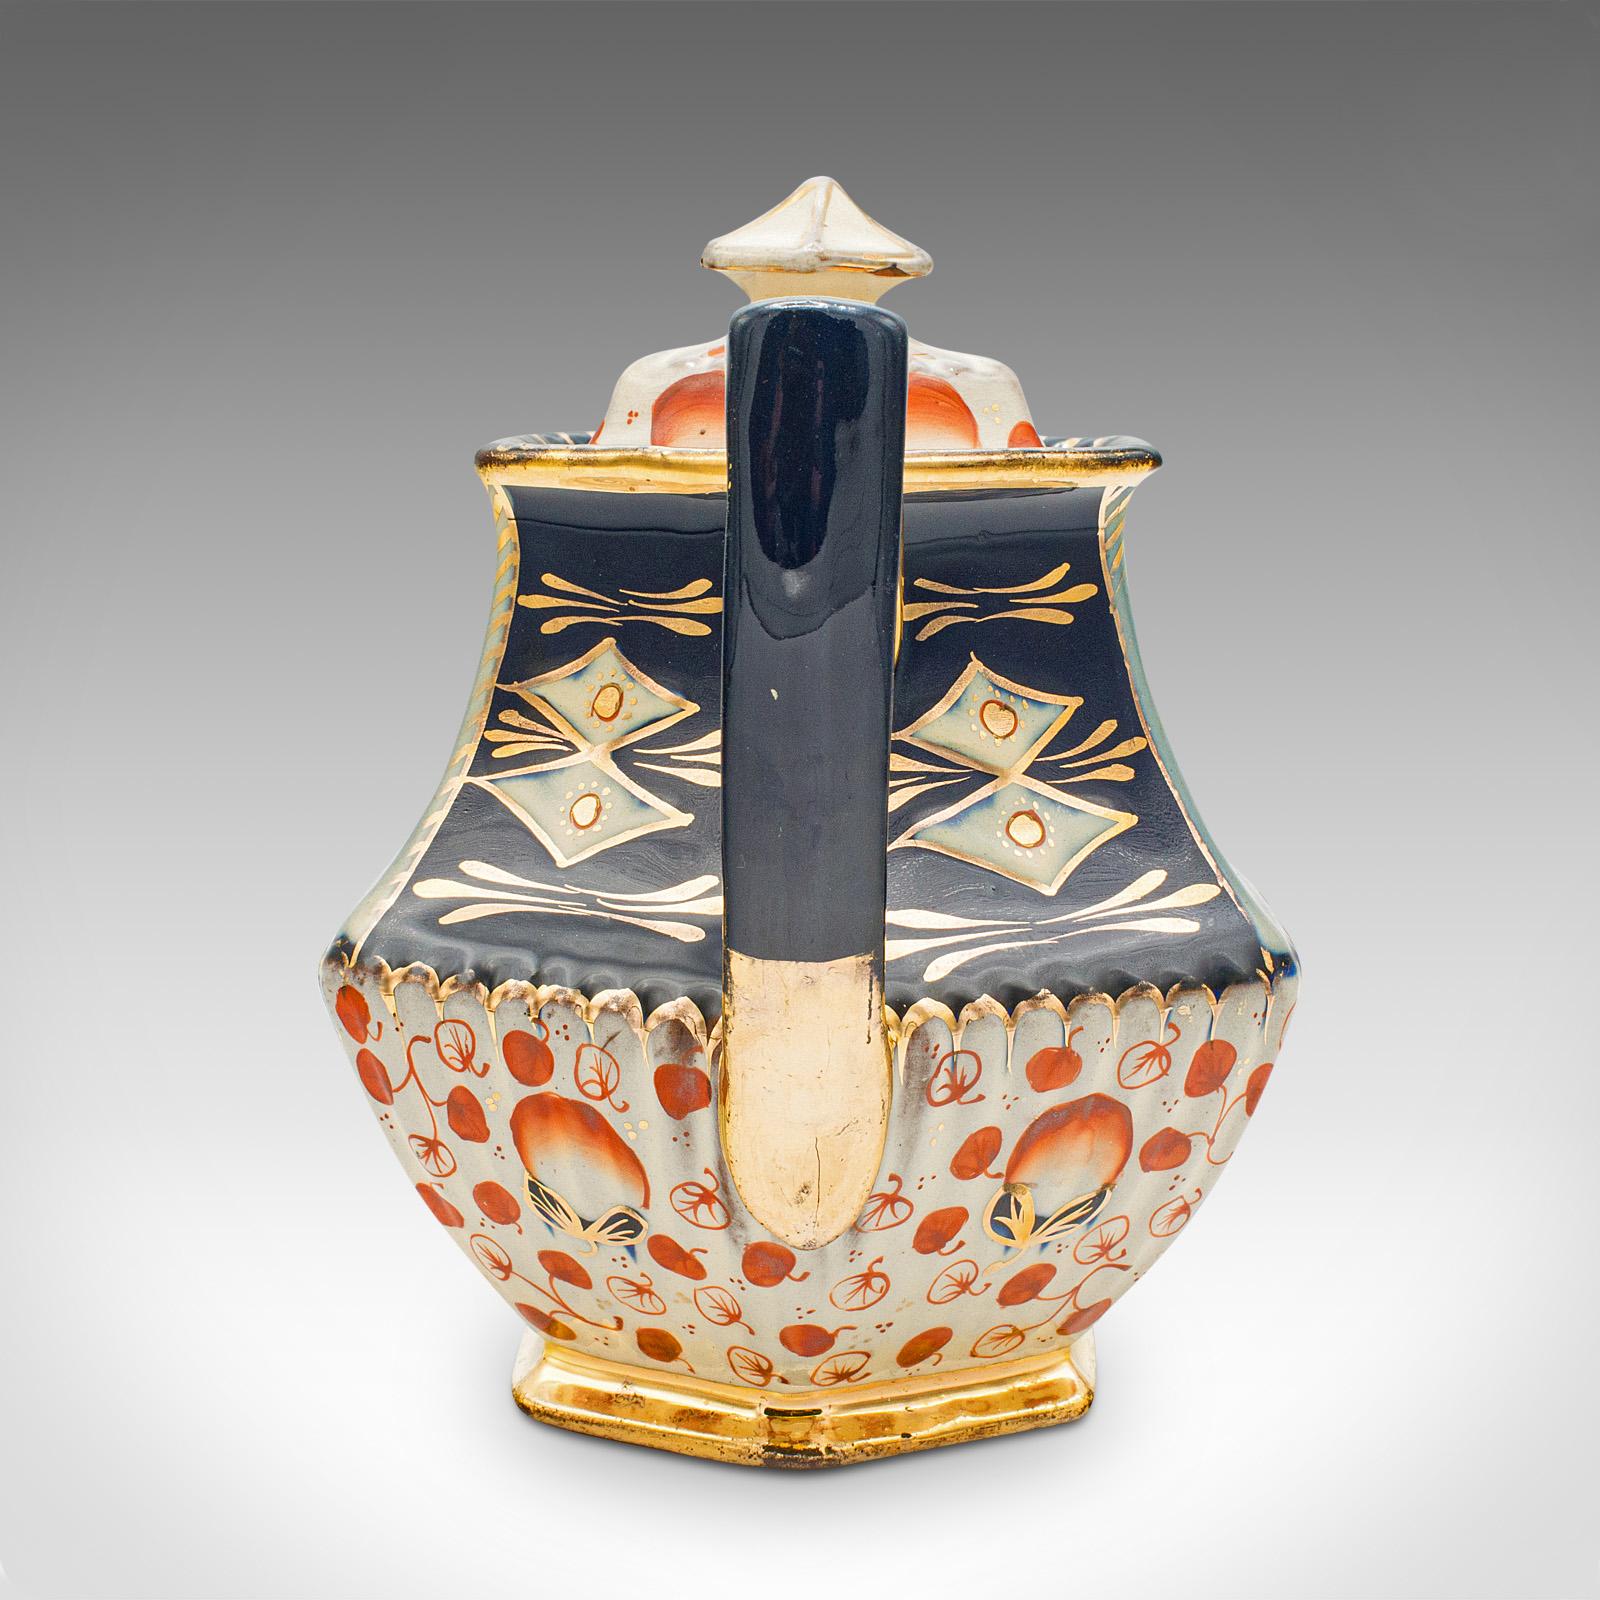 British Antique Imari Pattern Teapot, English, Ceramic, Decorative Tea Kettle, Victorian For Sale